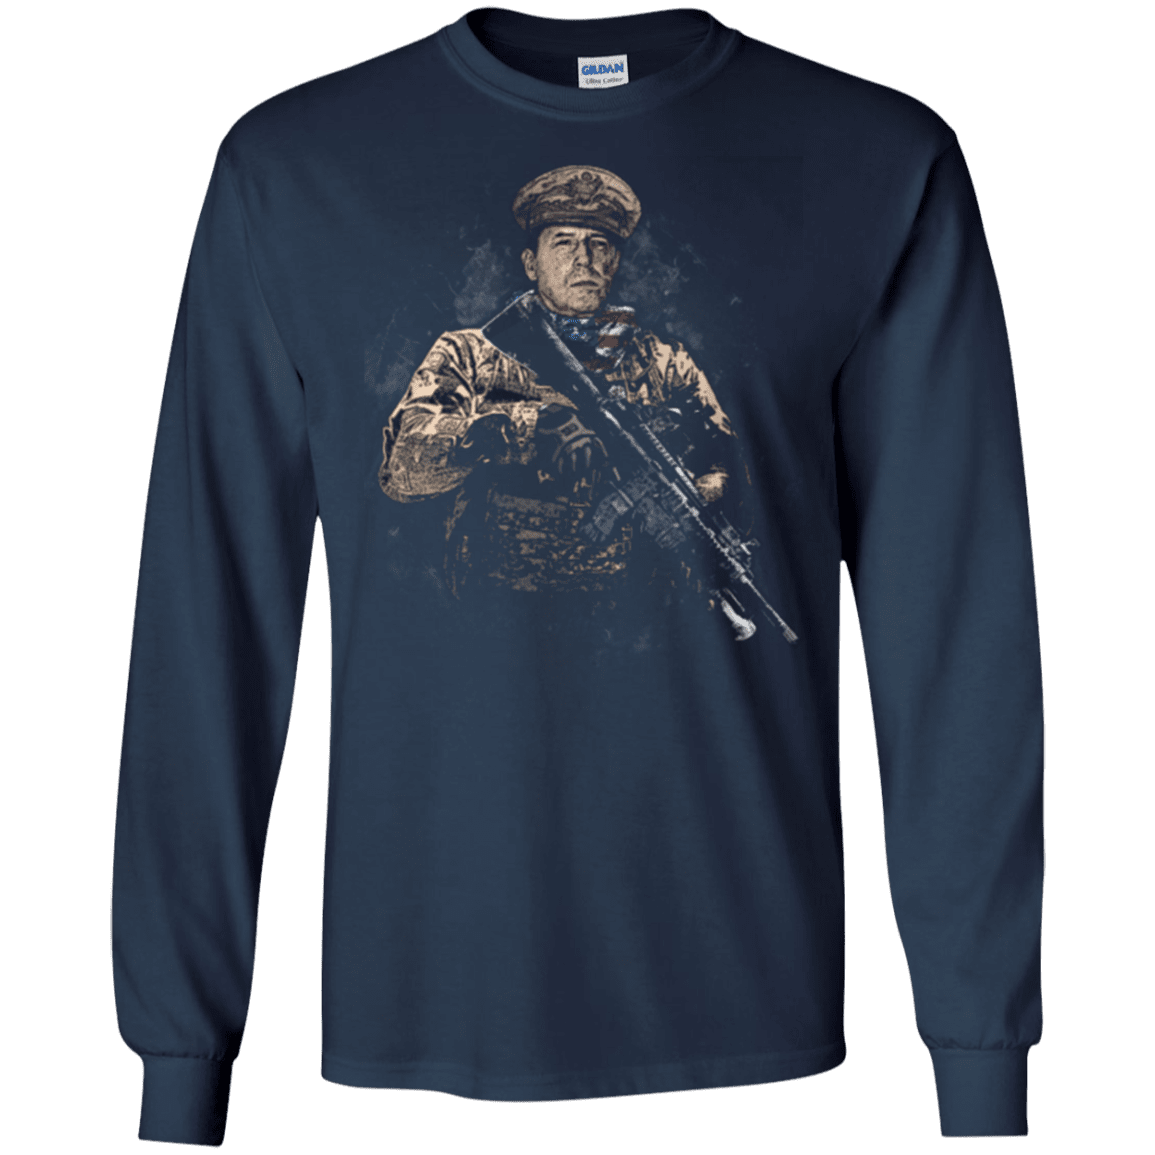 Military T-Shirt "MacArthur Soldier Presidents"-TShirt-General-Veterans Nation